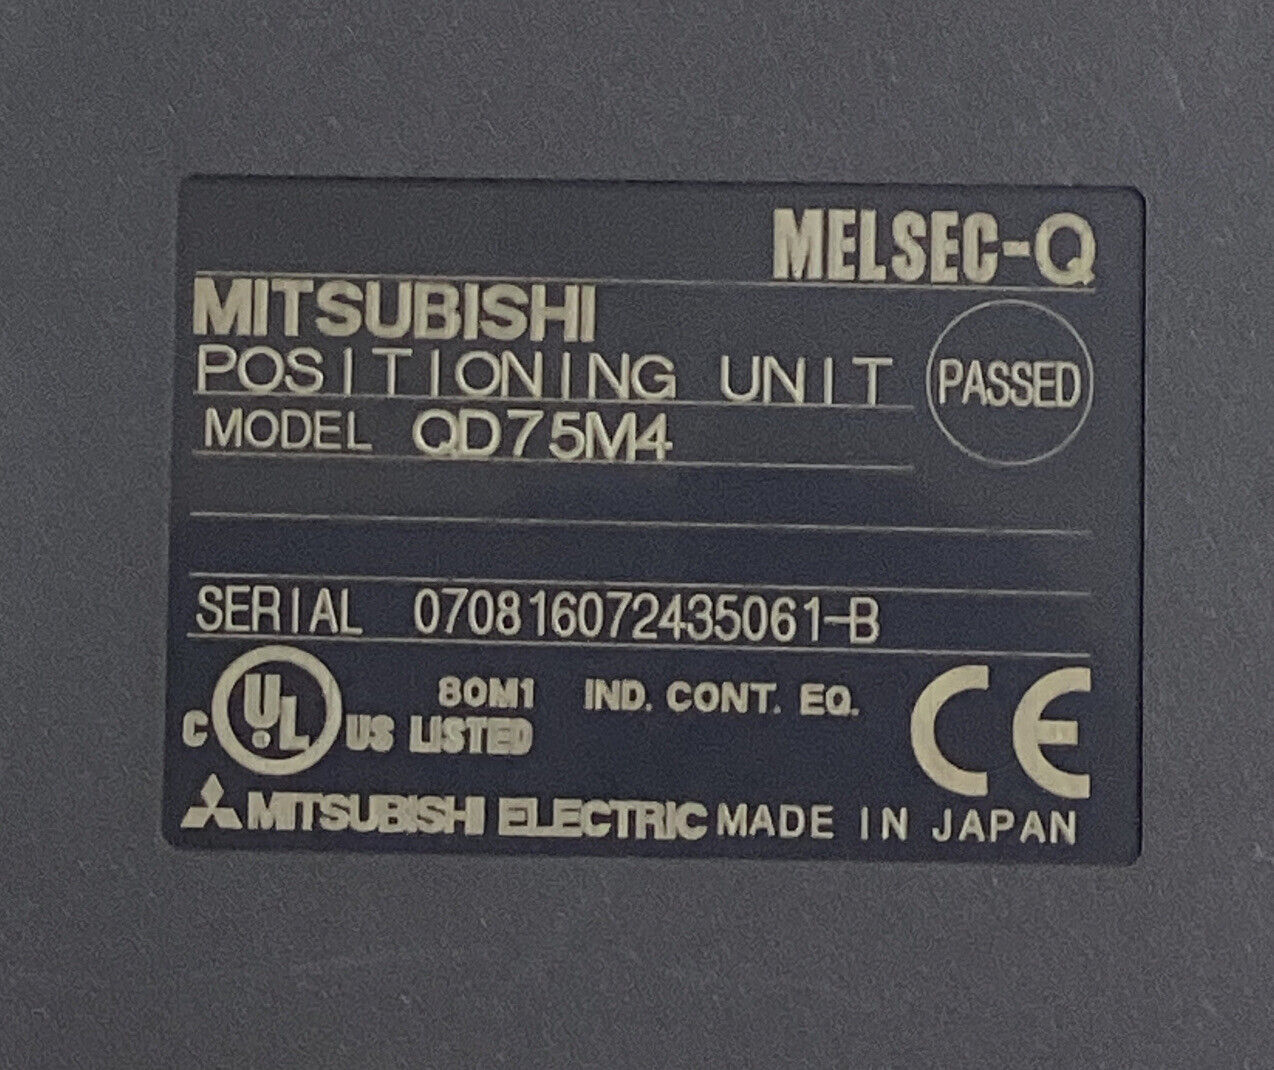 Mitsubishi Melsec-Q QD75M4 32 I/O Points 24 VDC, AXIS Positioning Module (YE194)